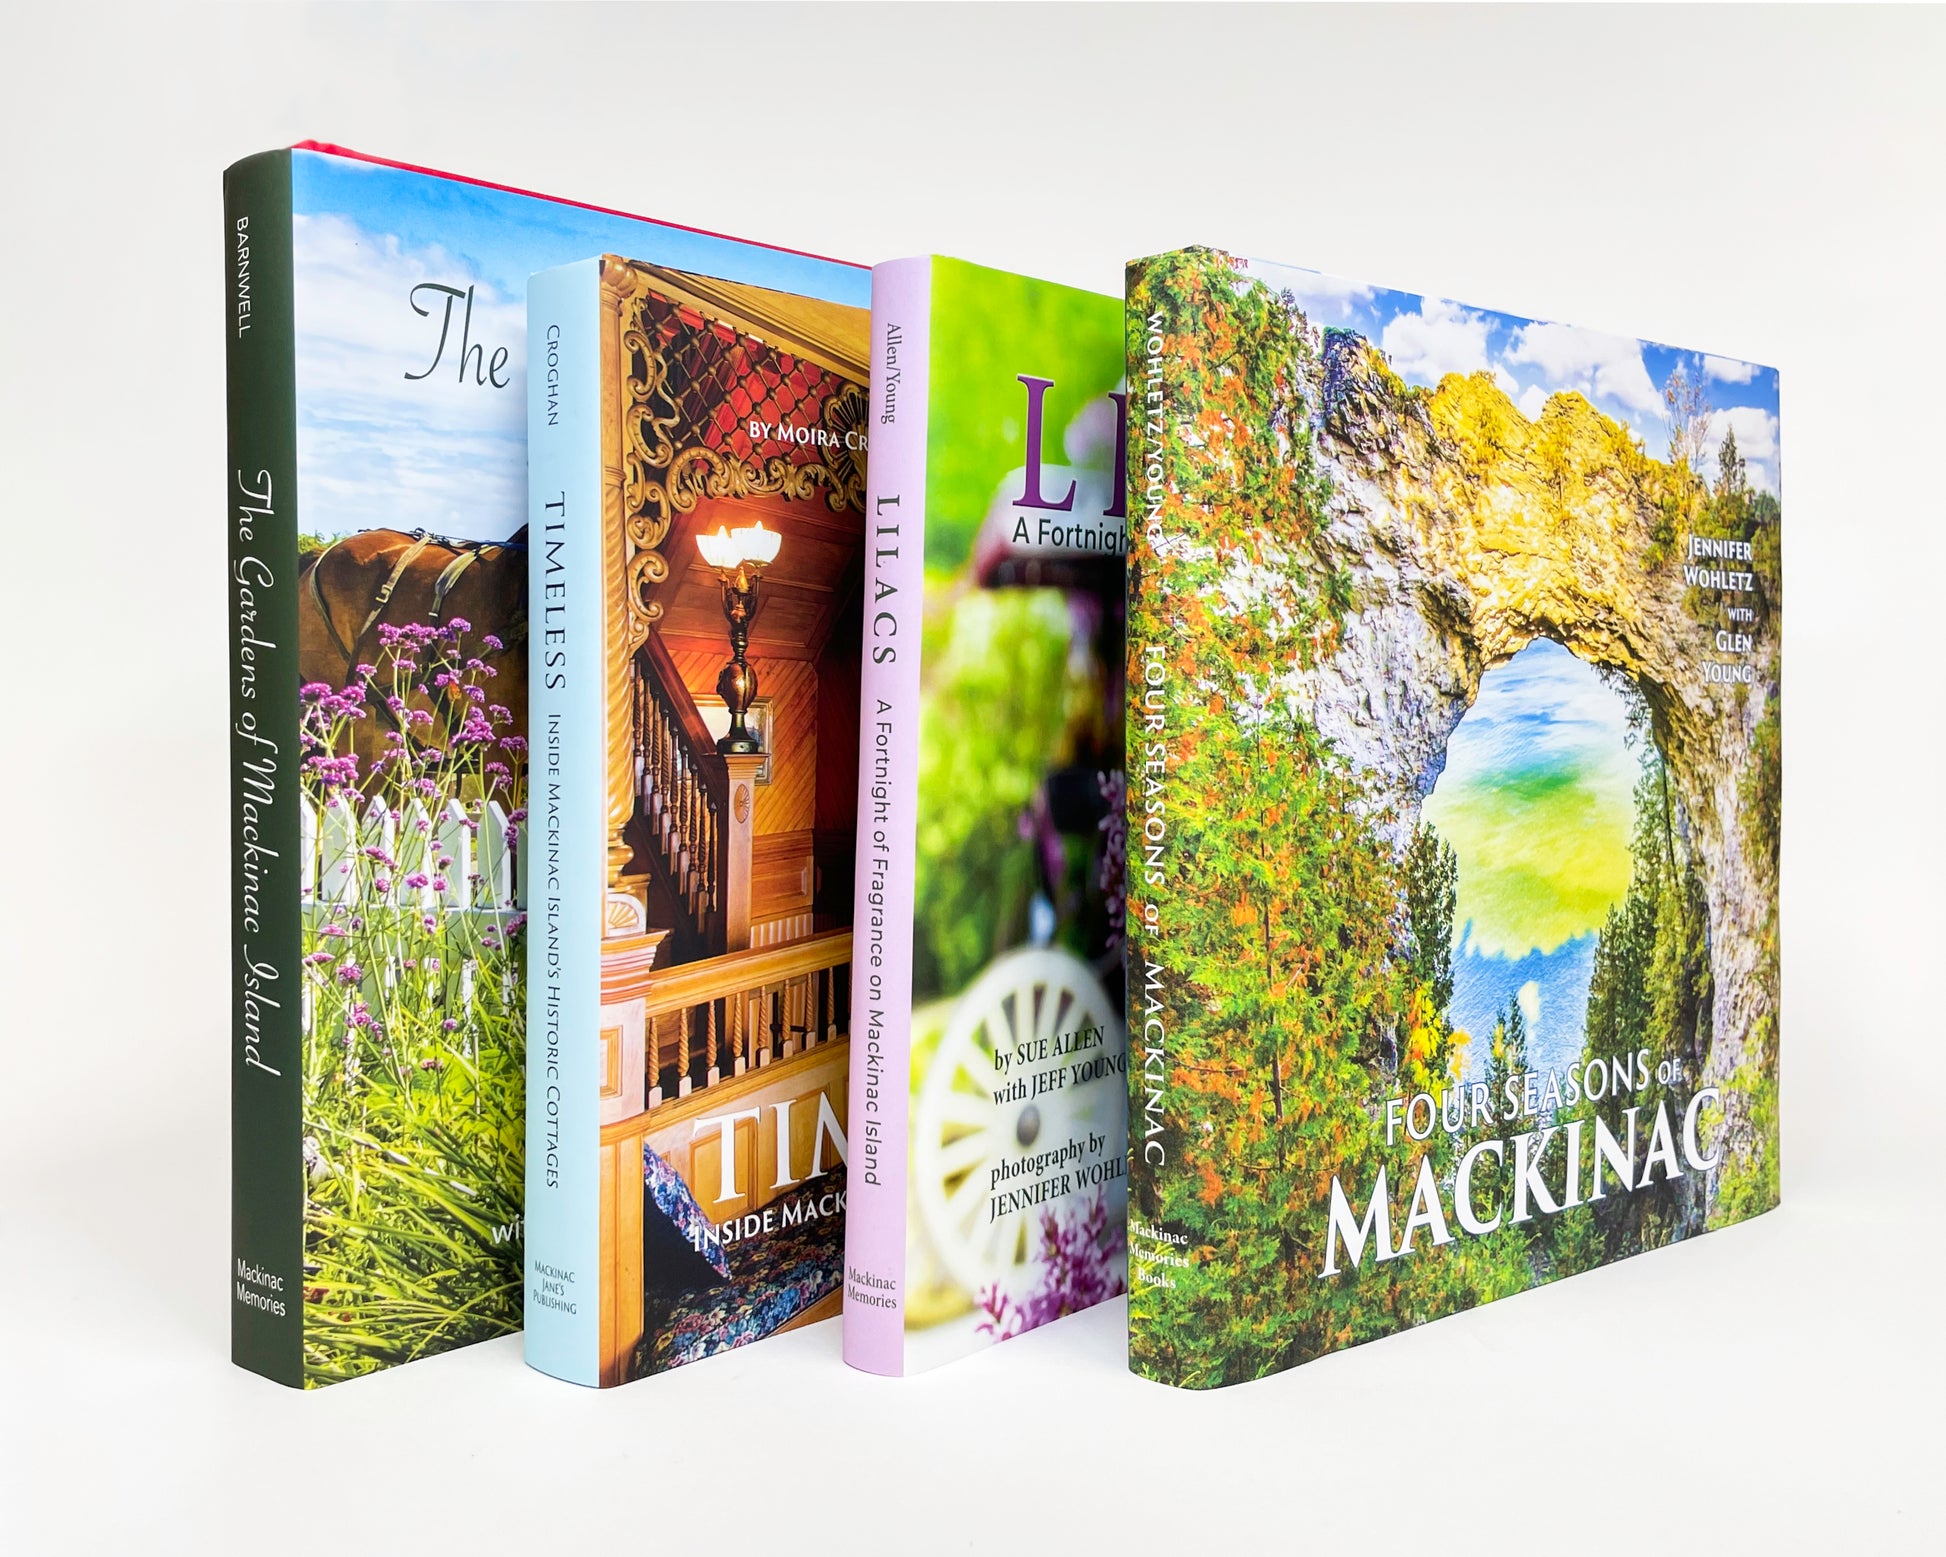 Mackinac Island books published by Mackinac Memories.